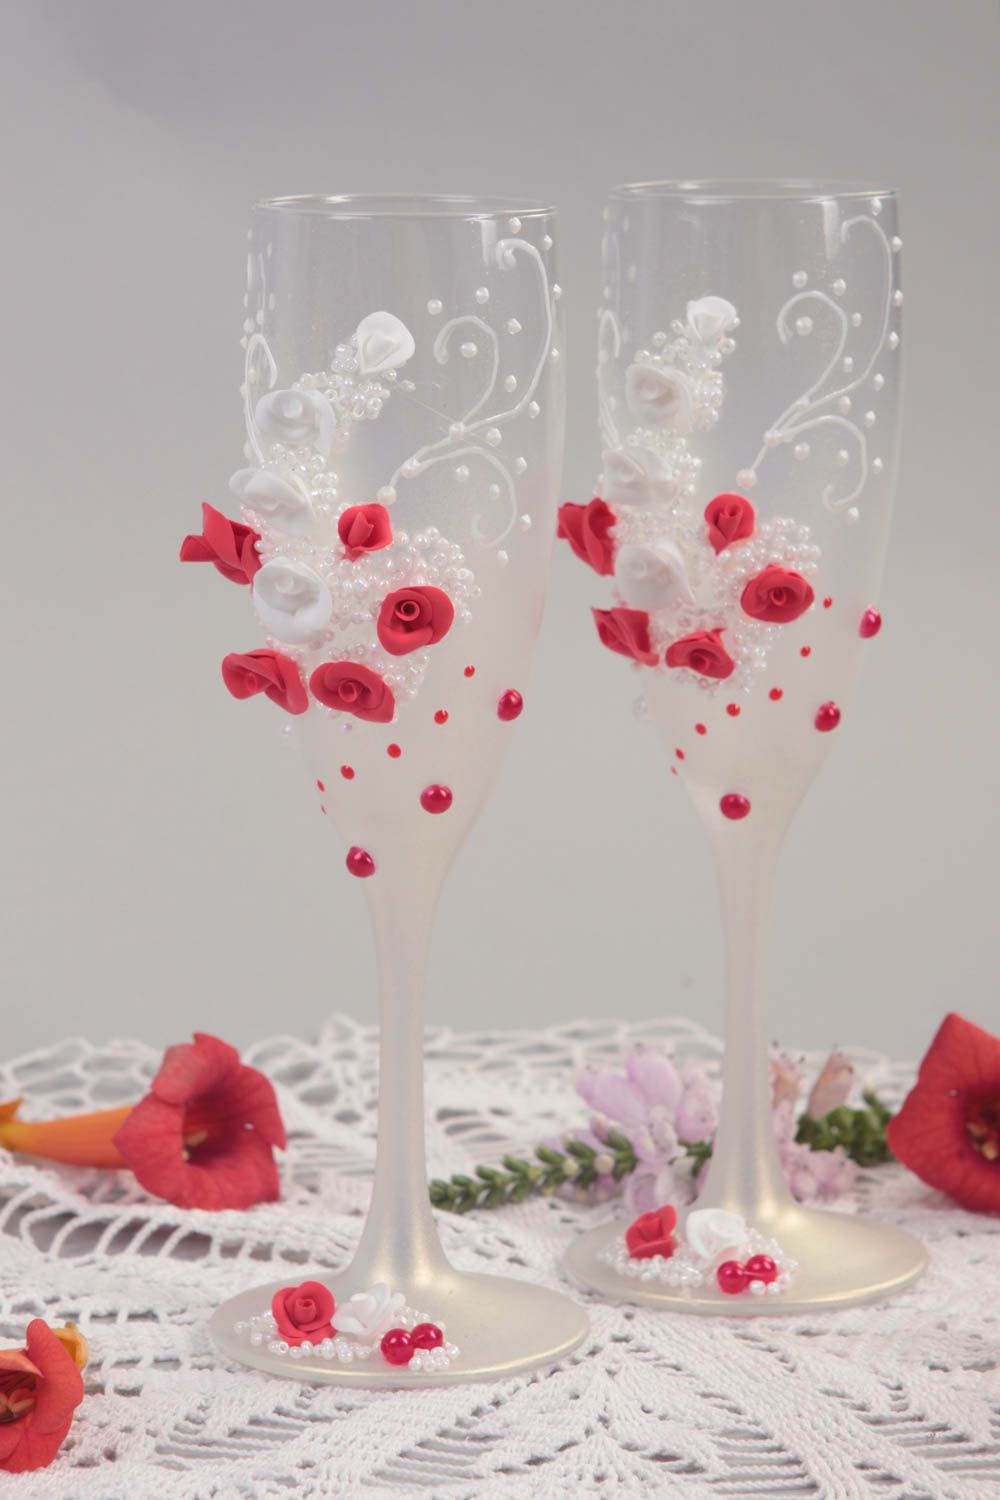 Handmade wedding accessories festive wedding ware white glasses with flowers photo 1